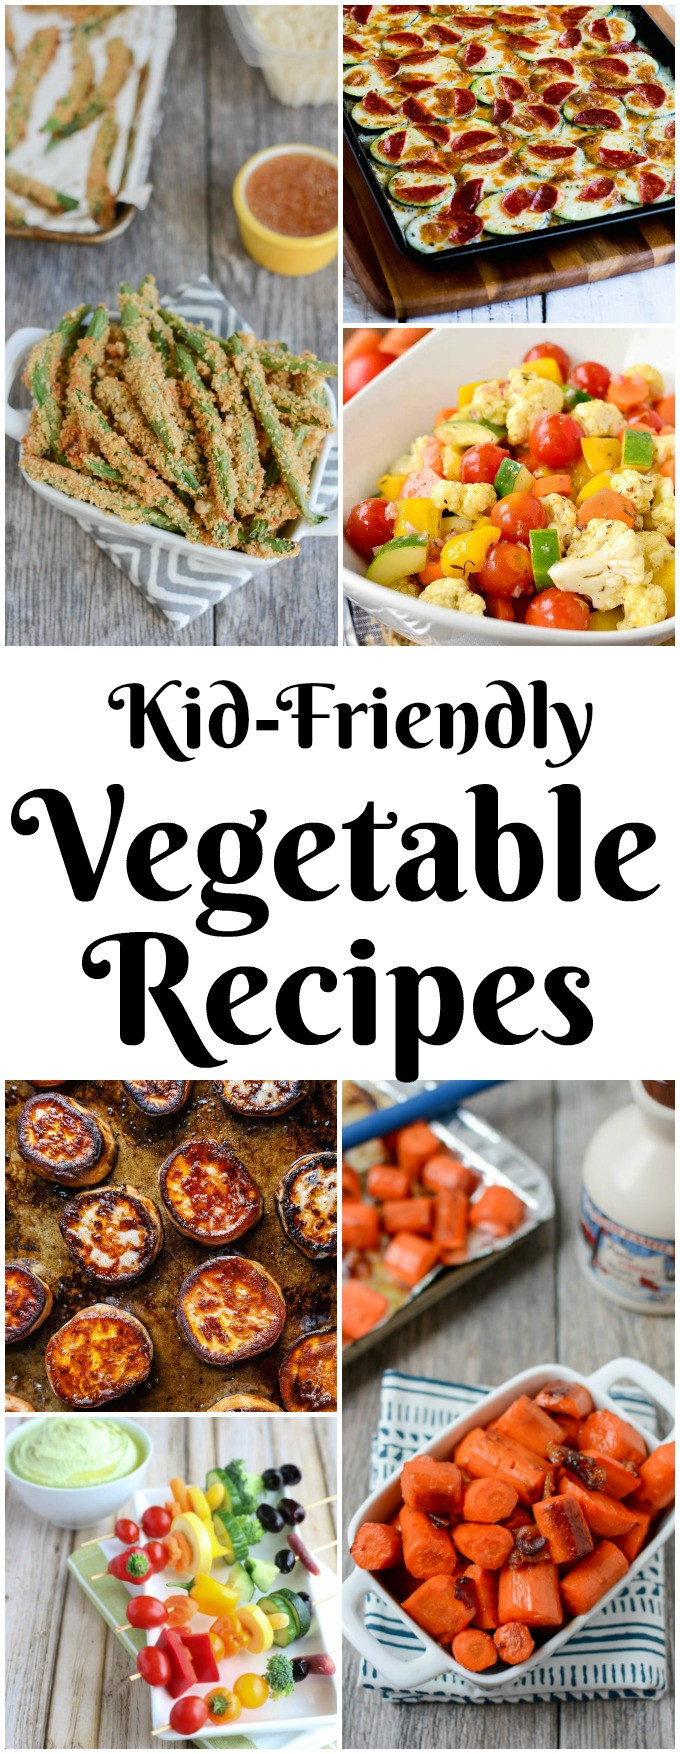 Easy Vegan Dinner Recipes Kid Friendly
 10 Kid Friendly Ve able Recipes